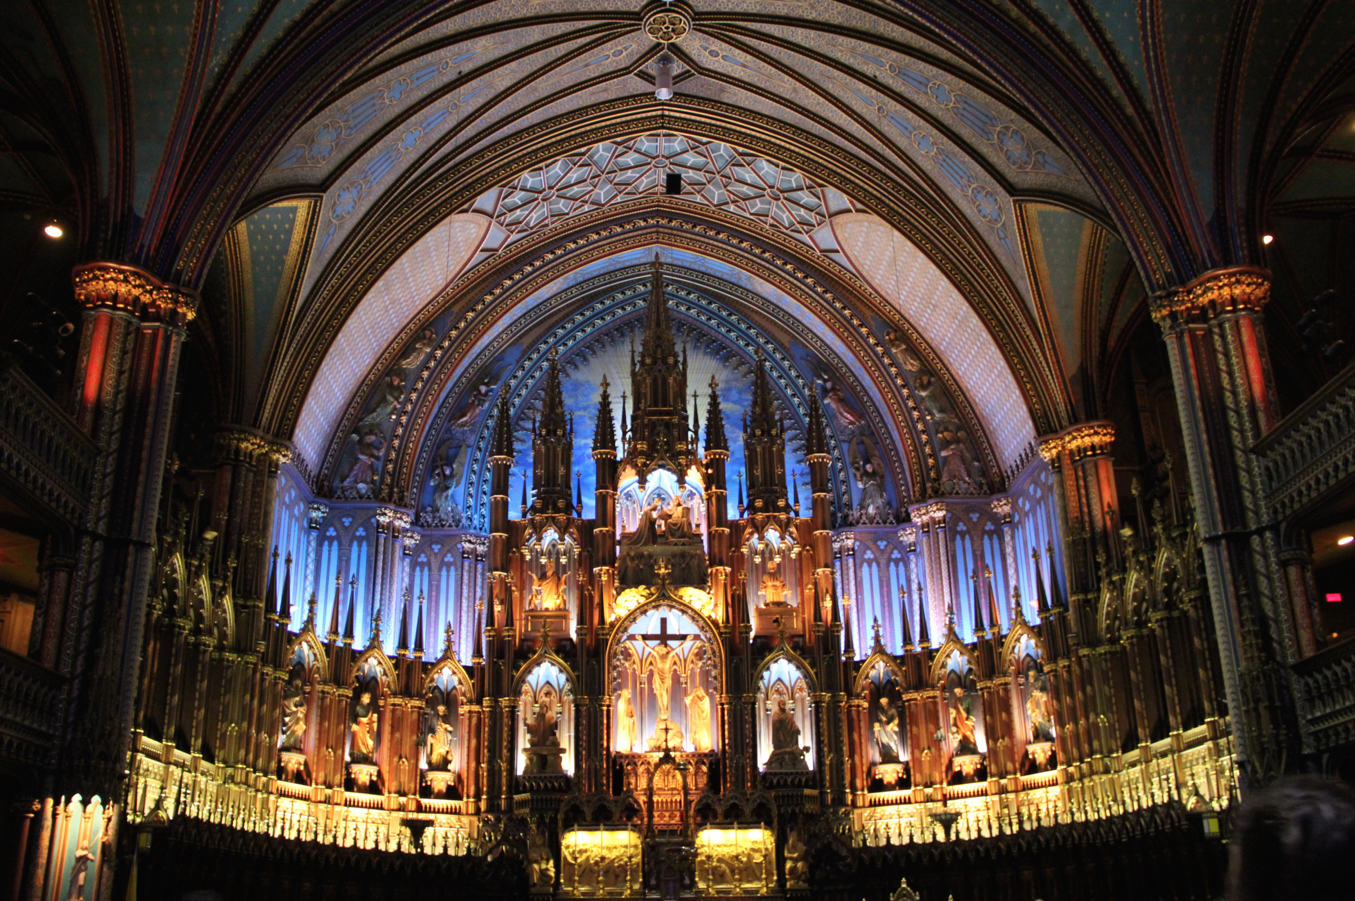 Notre Dame Basilica, Montreal 